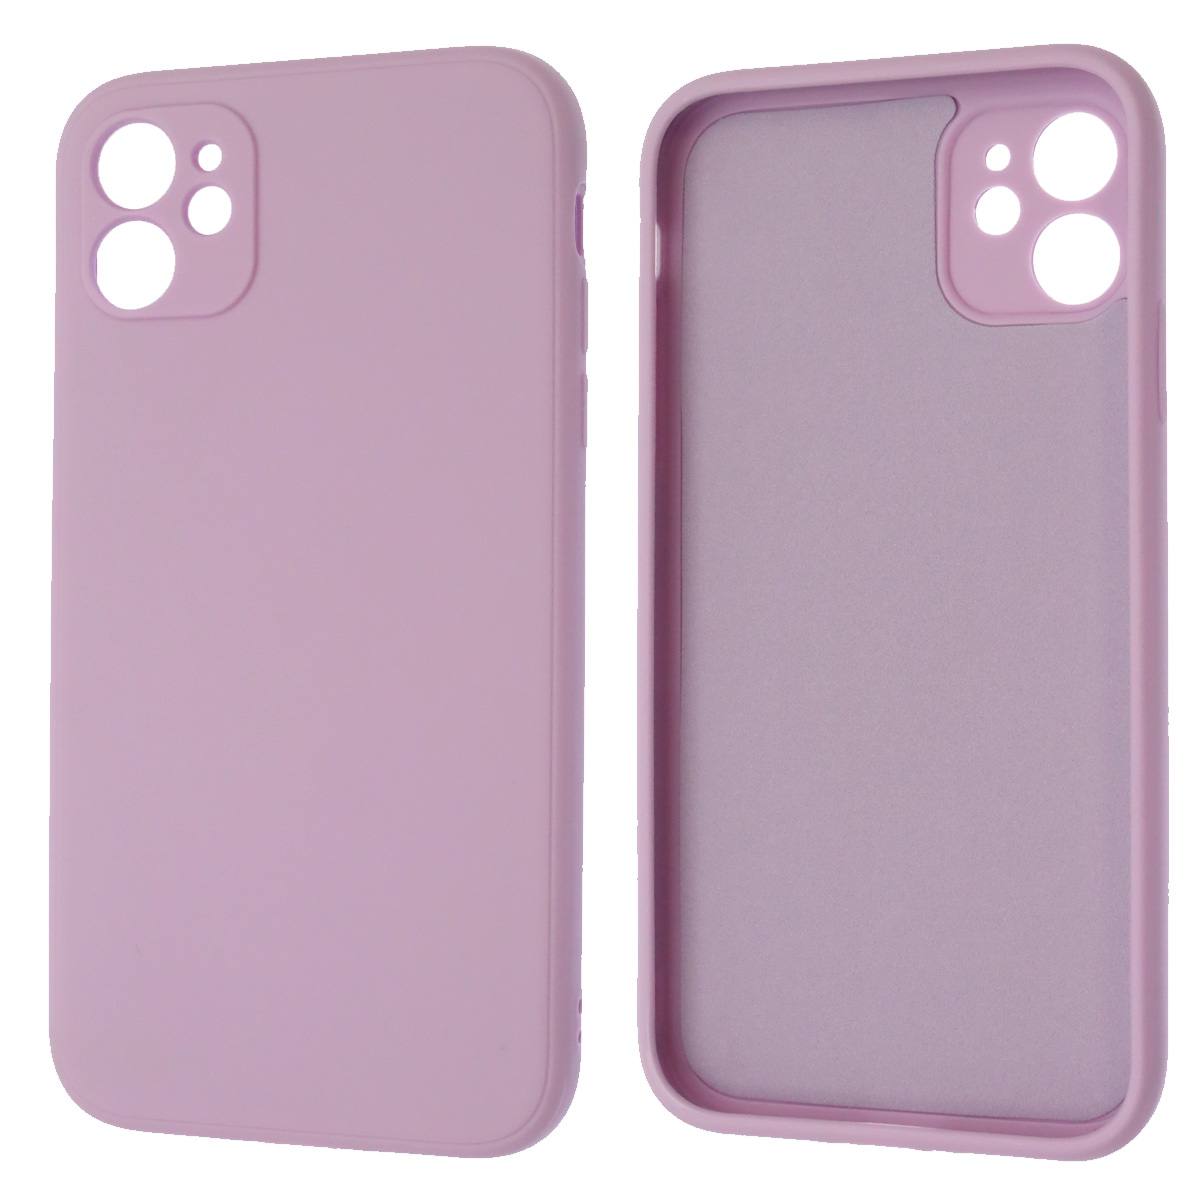 Чехол накладка для APPLE iPhone 11, силикон, бархат, цвет сиреневый